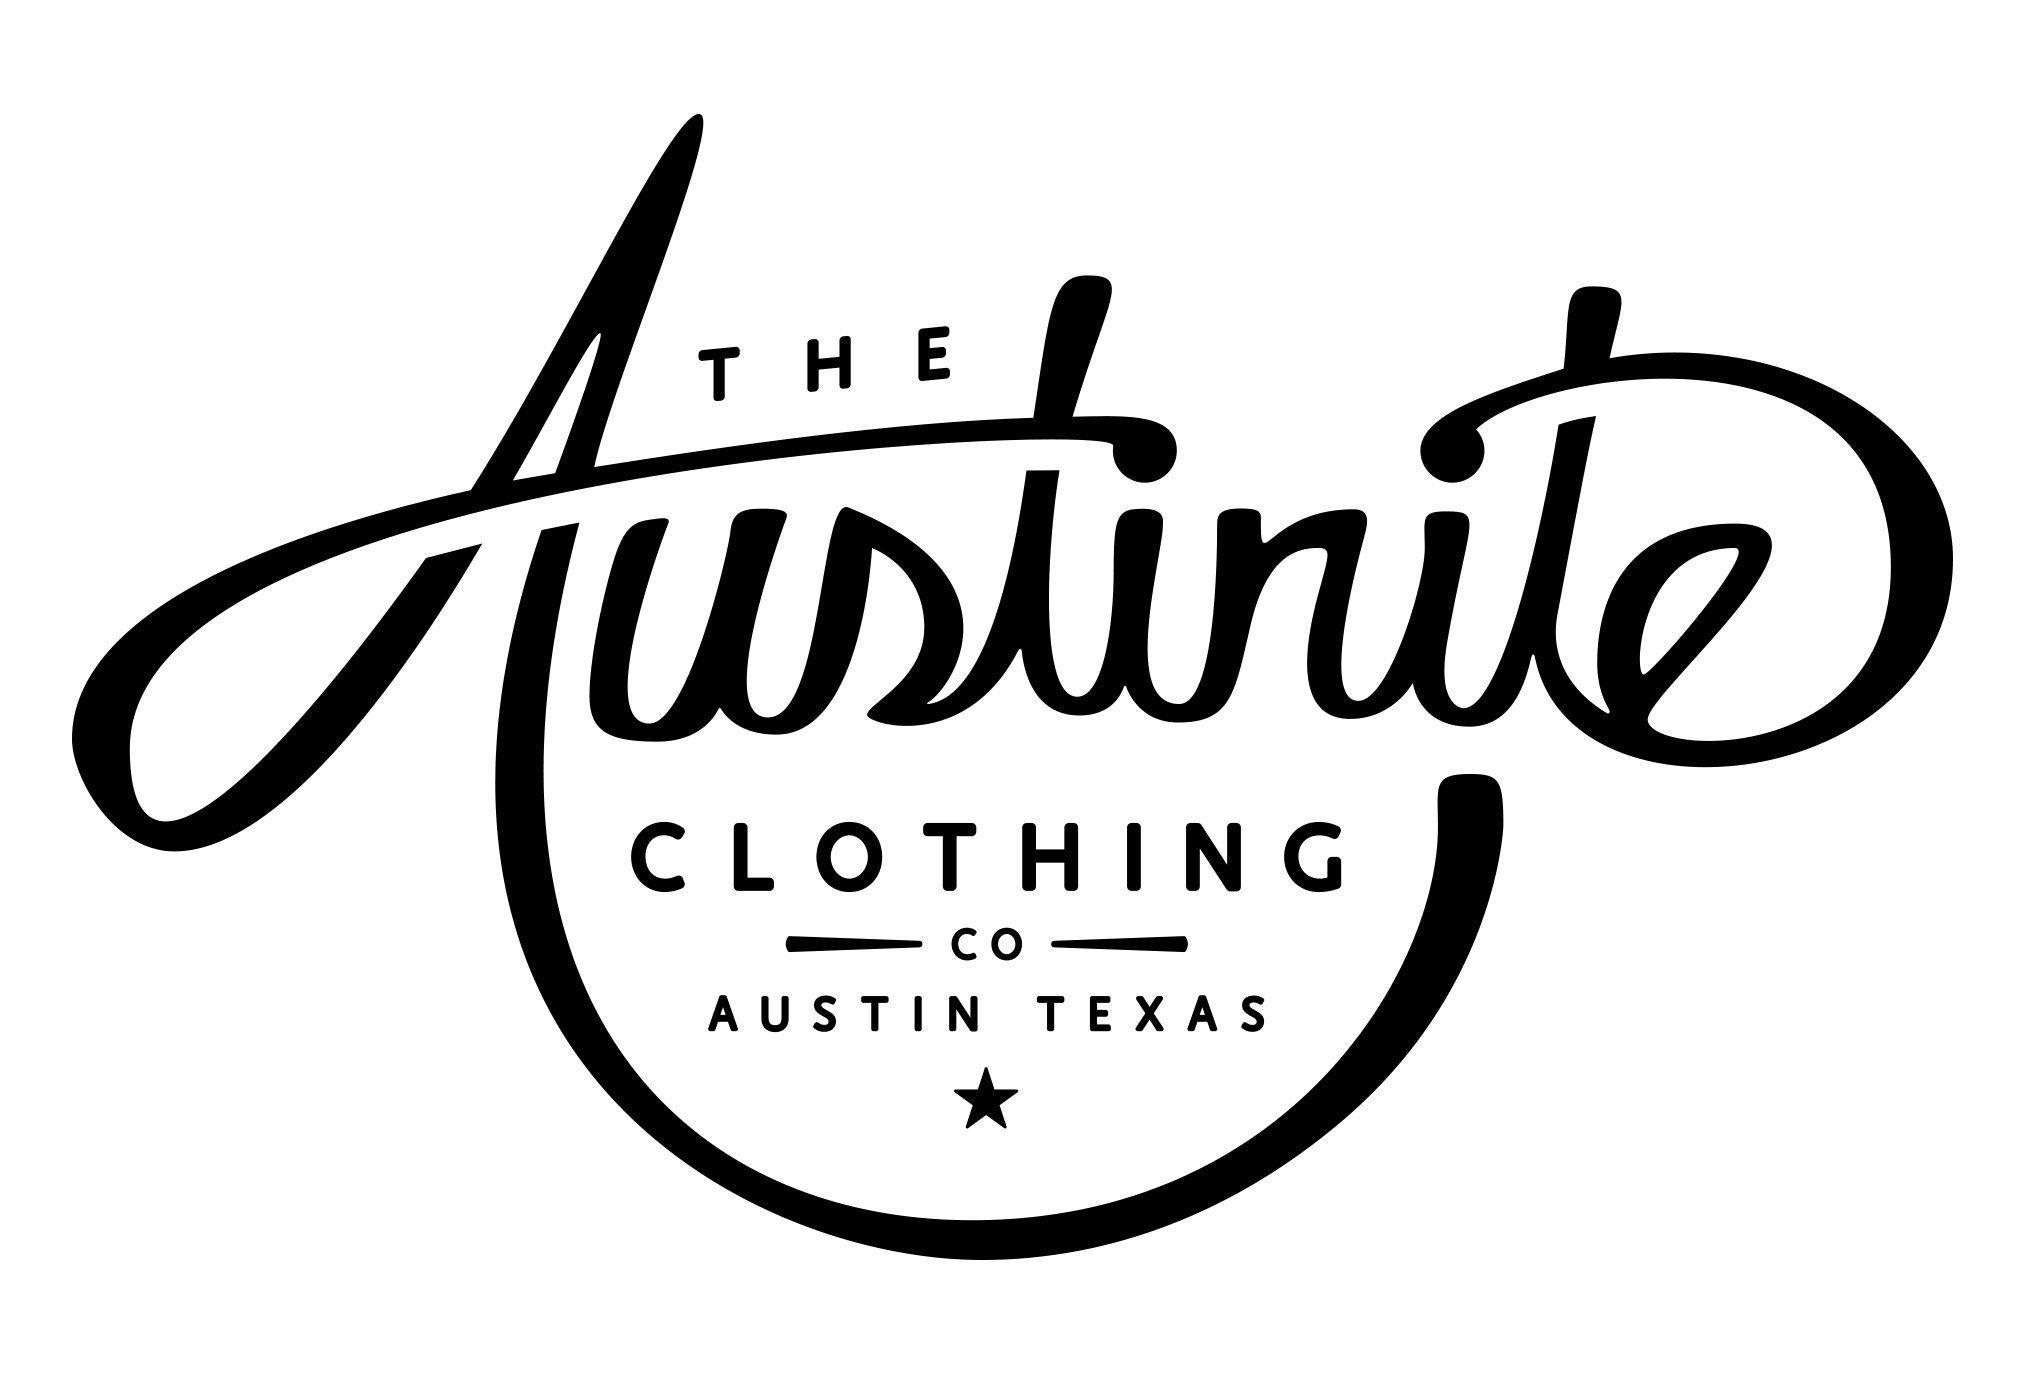 Clothing Company Logo - Austinite Clothing Co. don't like the circle at the bottom